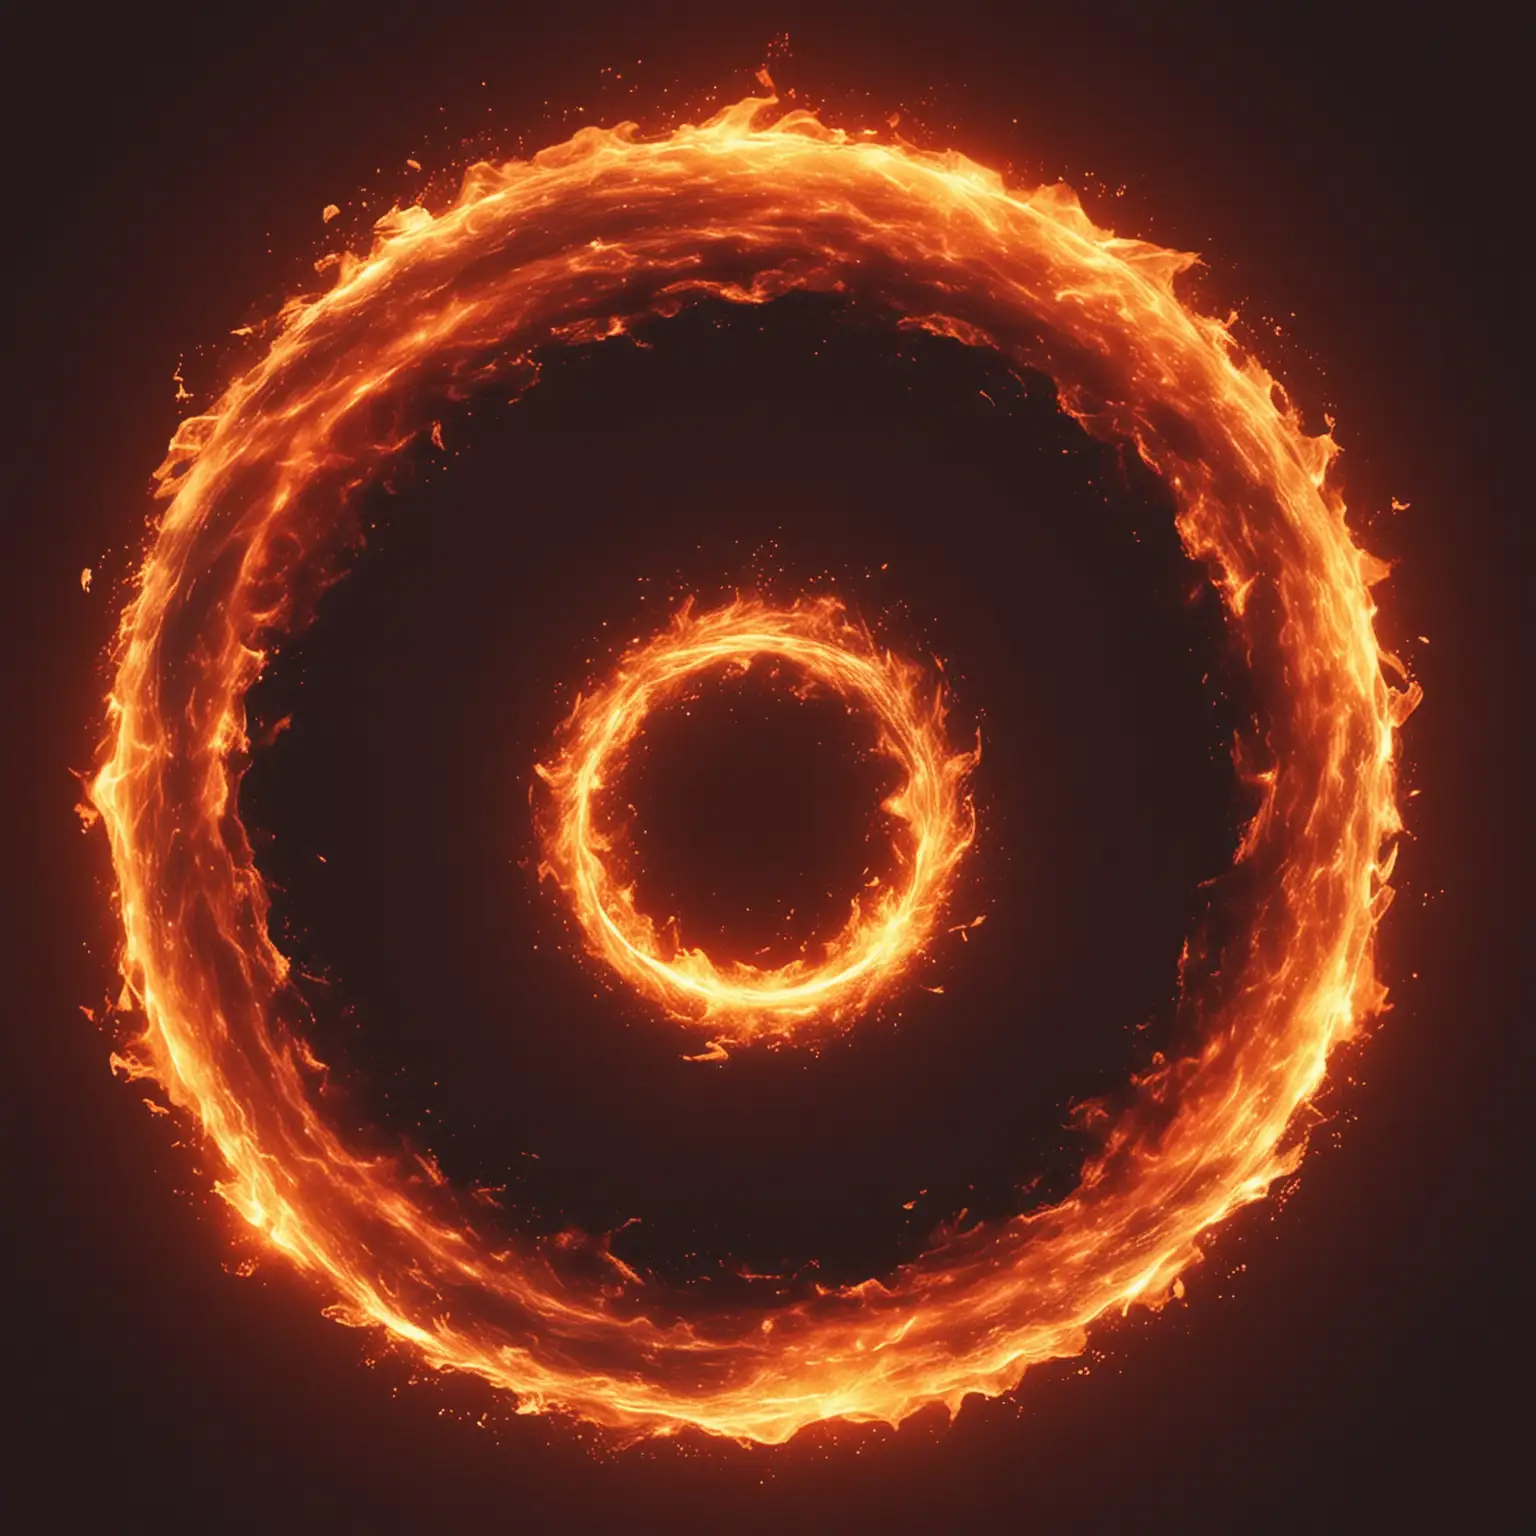 Electronic Music Single Cover Circular Fire Display